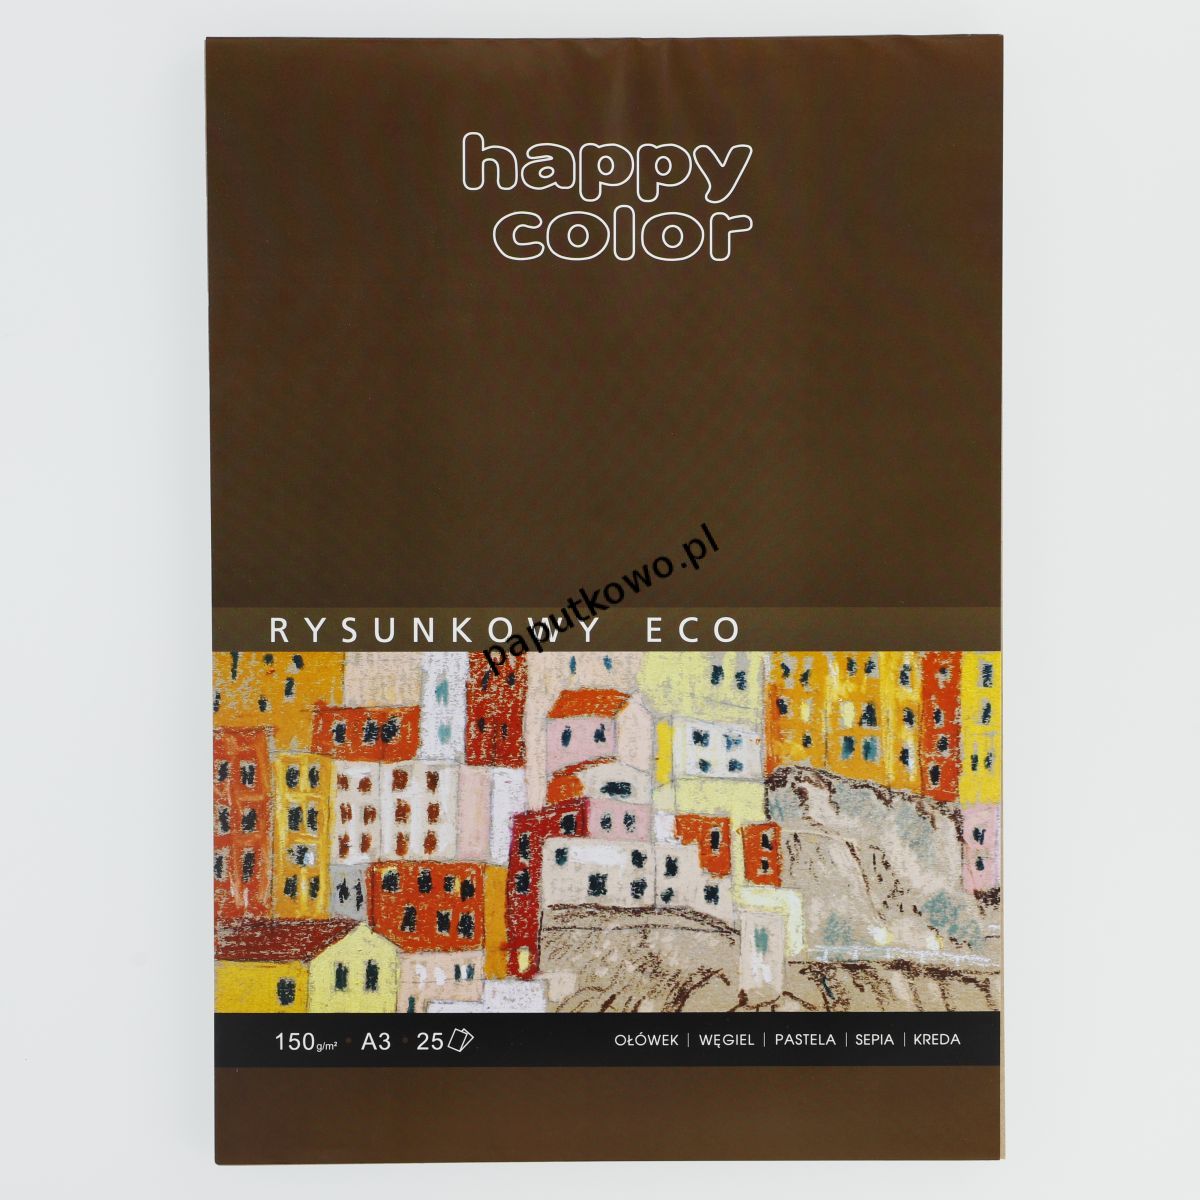 Blok rysunkowy Gdd Happy Color rysunkowy eko młody artysta A3 150g 25k (HA 3715 3040 A25)